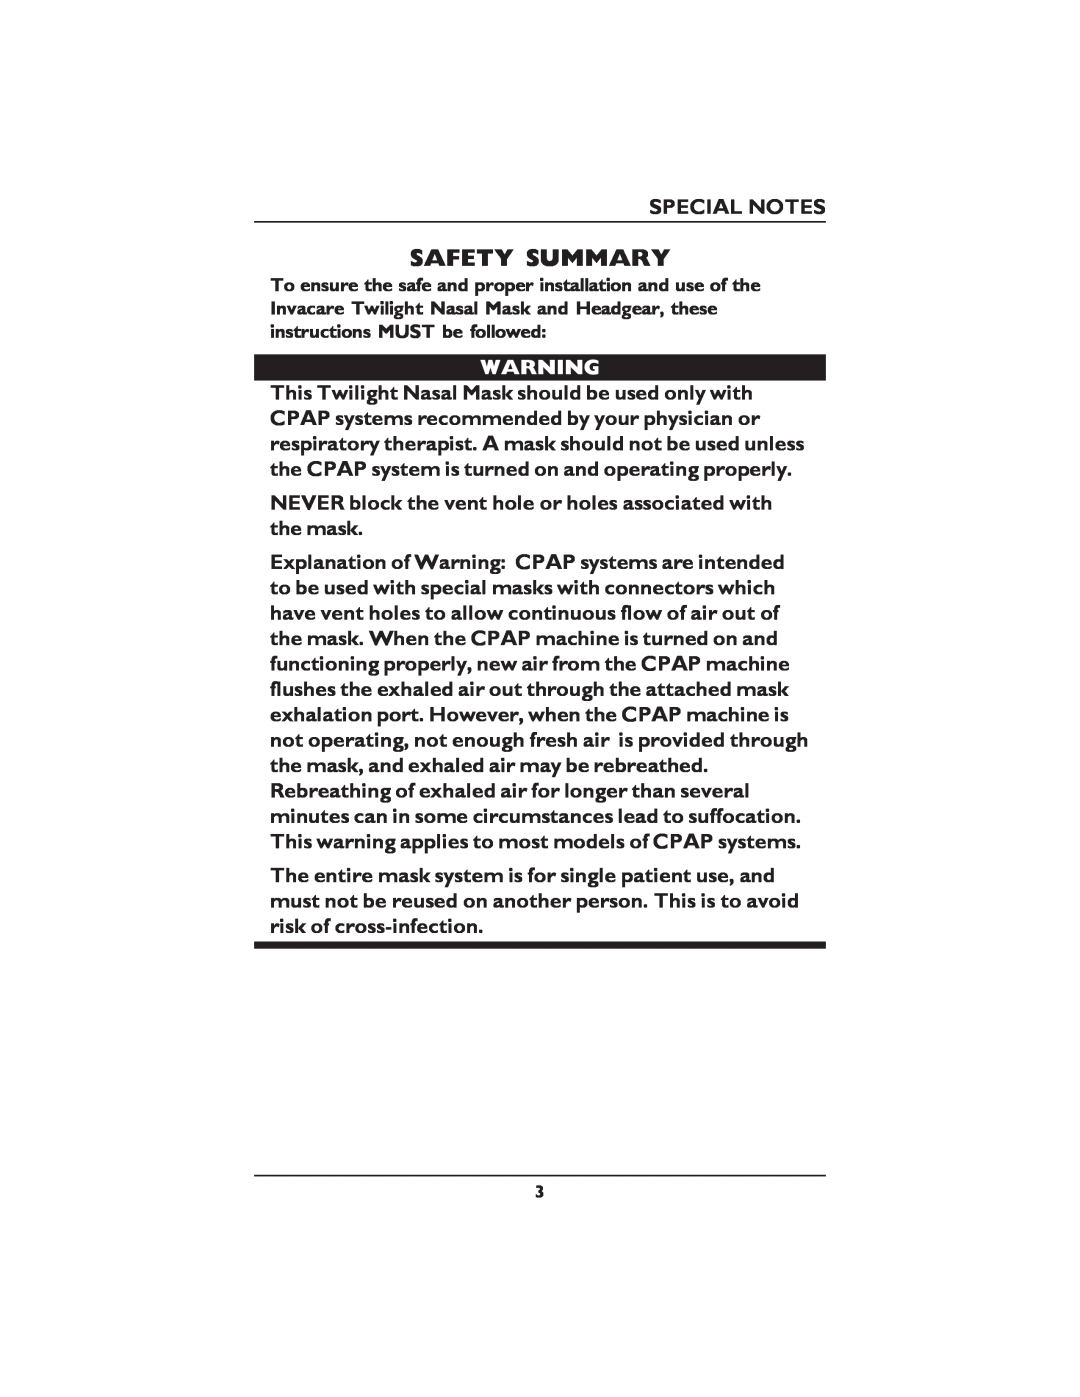 Invacare ISP2000 operating instructions Safety Summary 